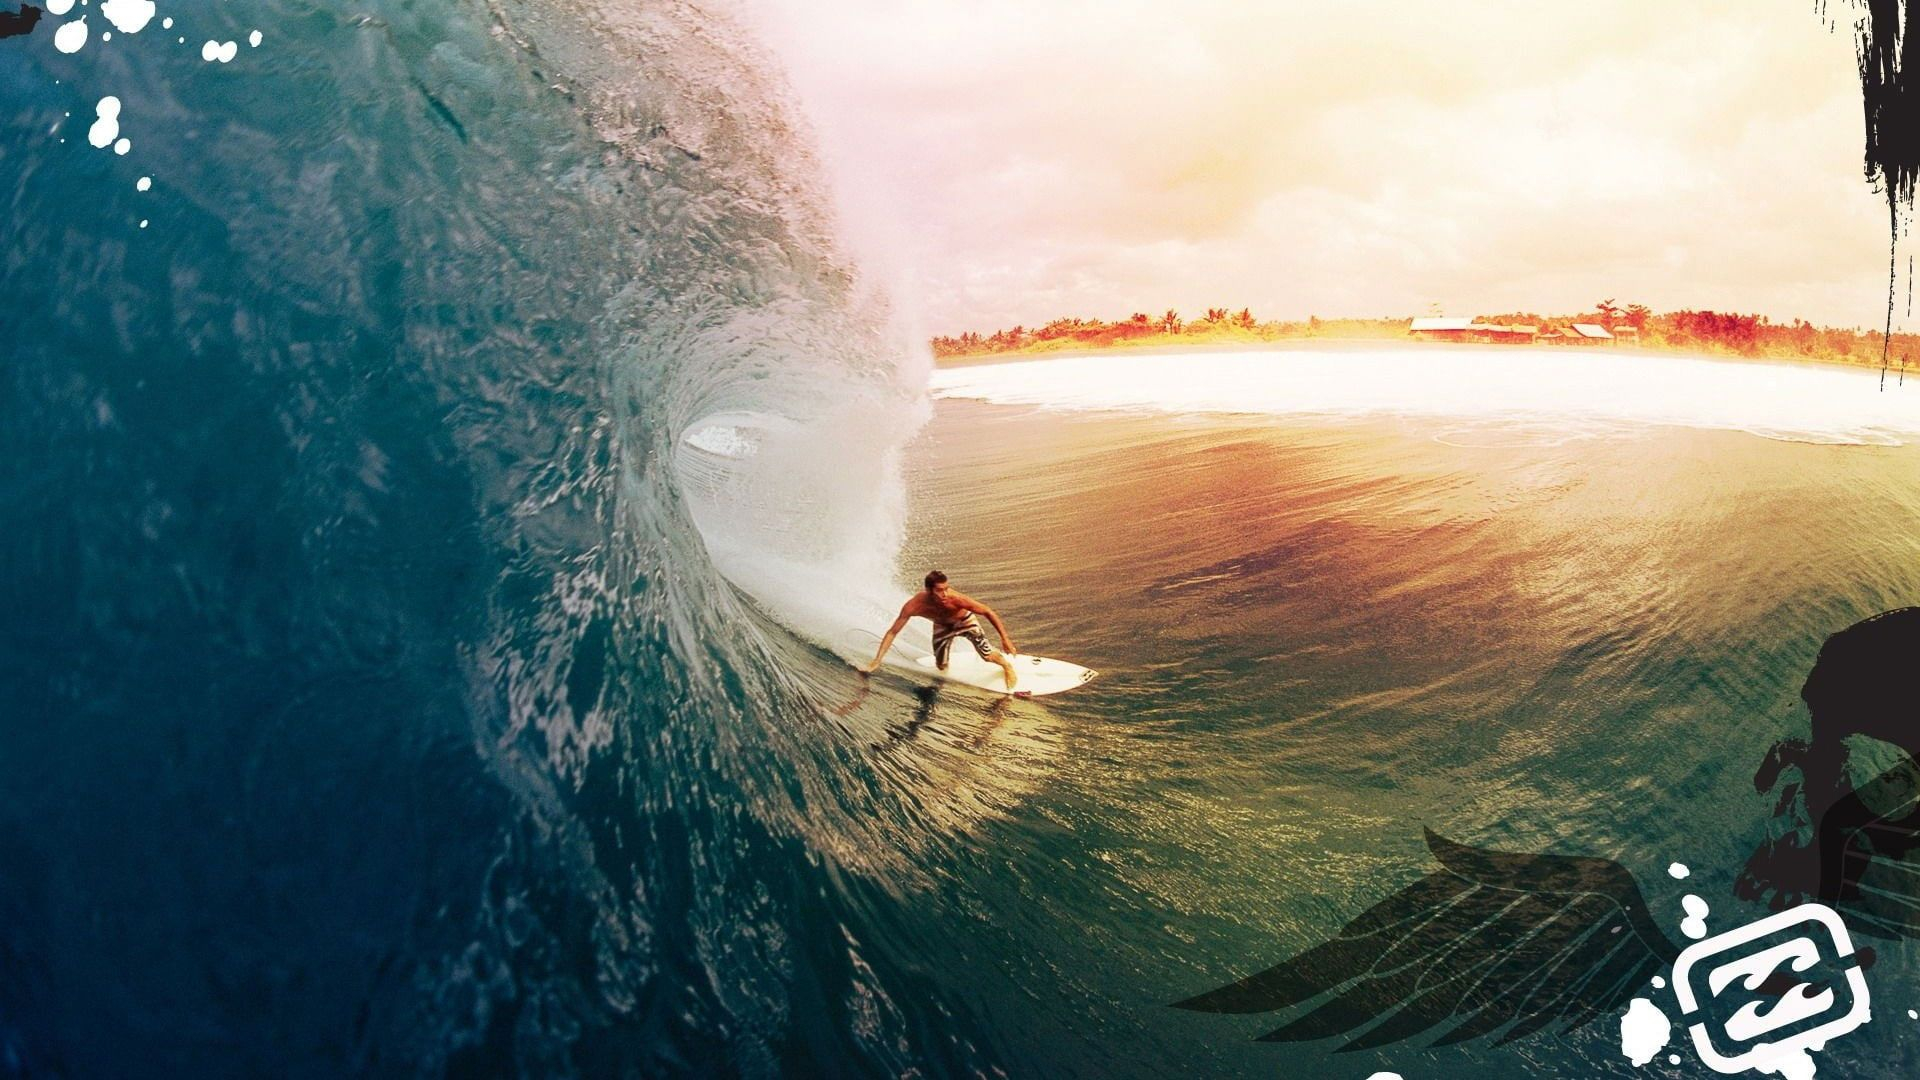 1920x1080 Surfing HD, surfer on white surfboard, sports | Surfing wallpaper, Surfing waves, Surf wallpaper